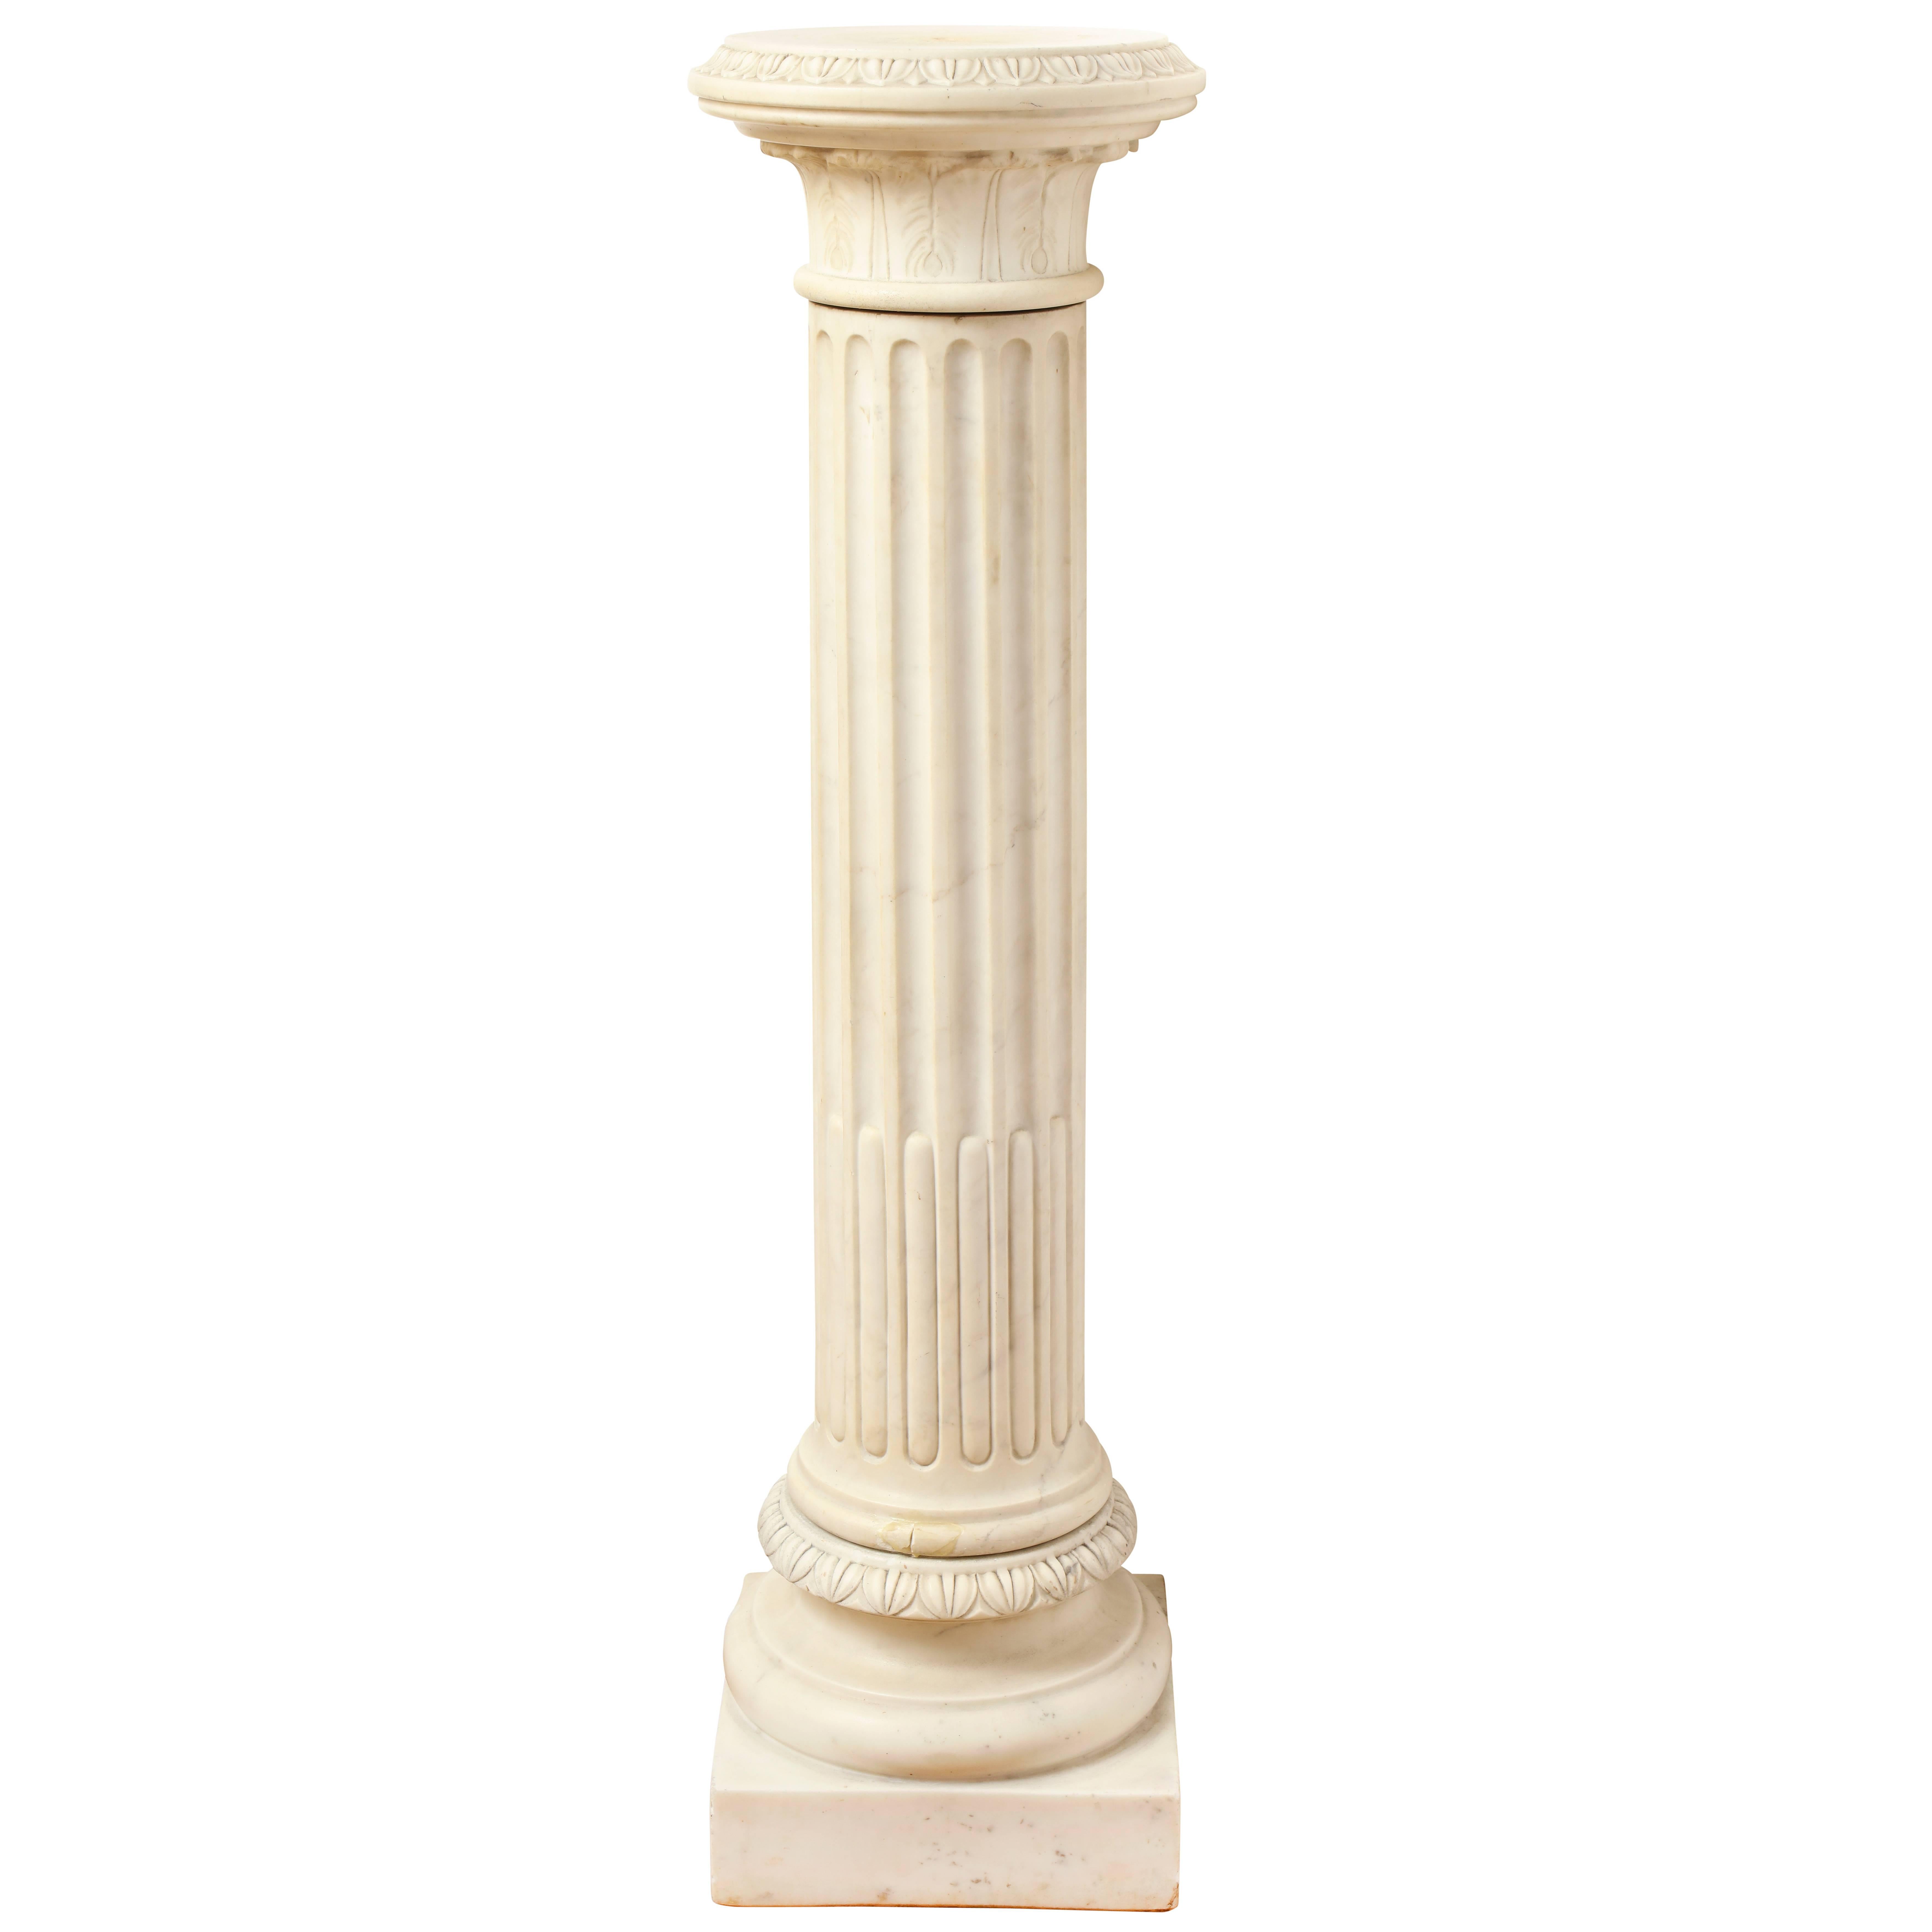 A Marble Corinthian Capital Architectural Pedestal